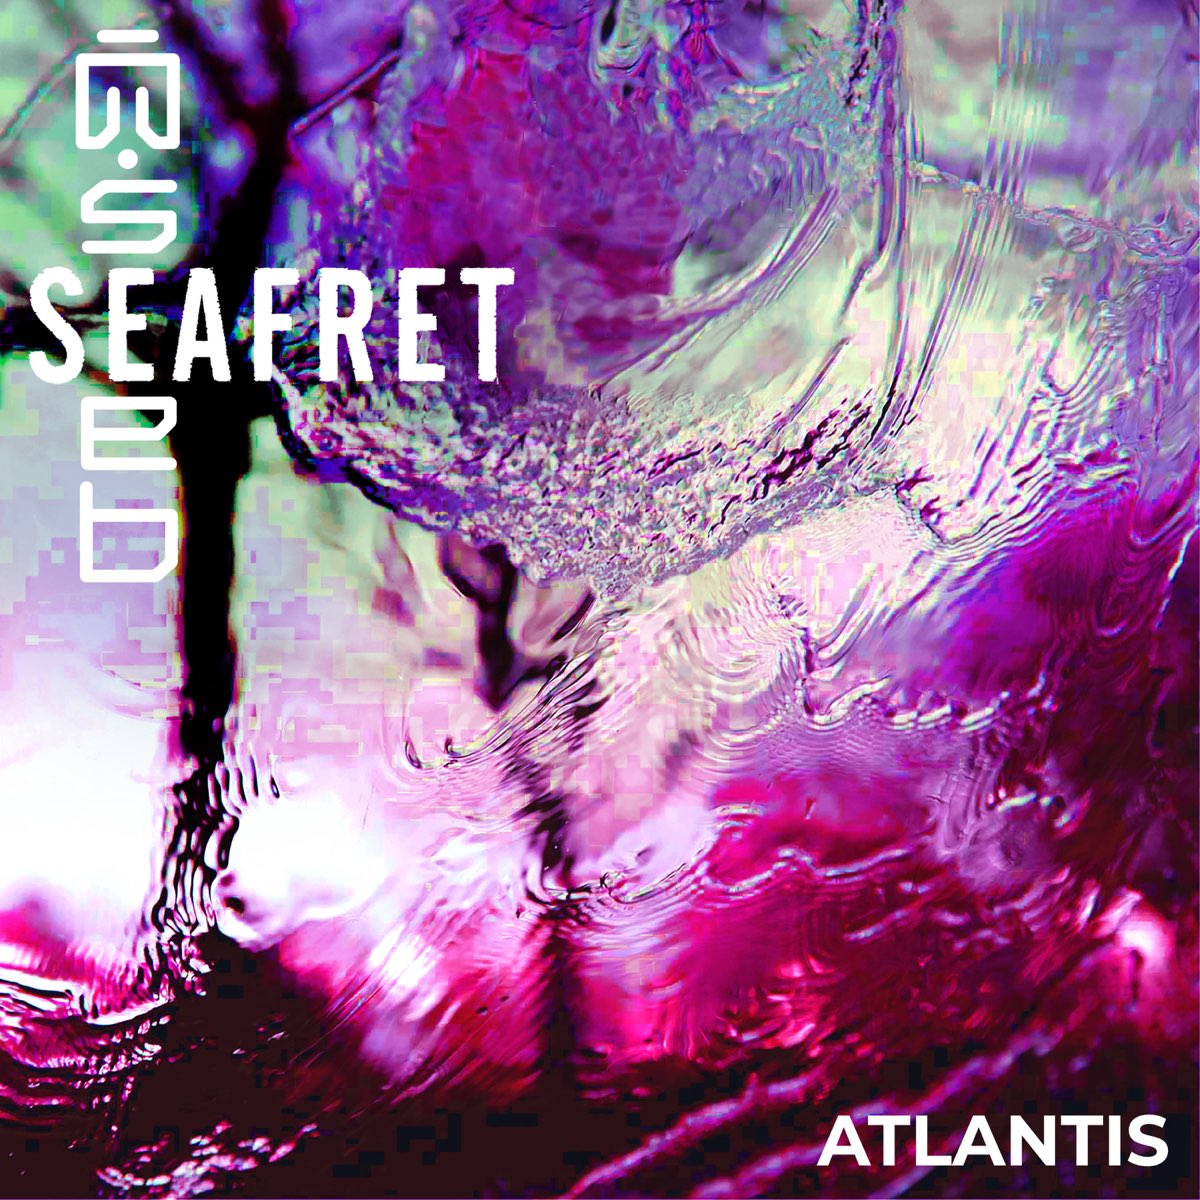 Atlantis seafret meaning